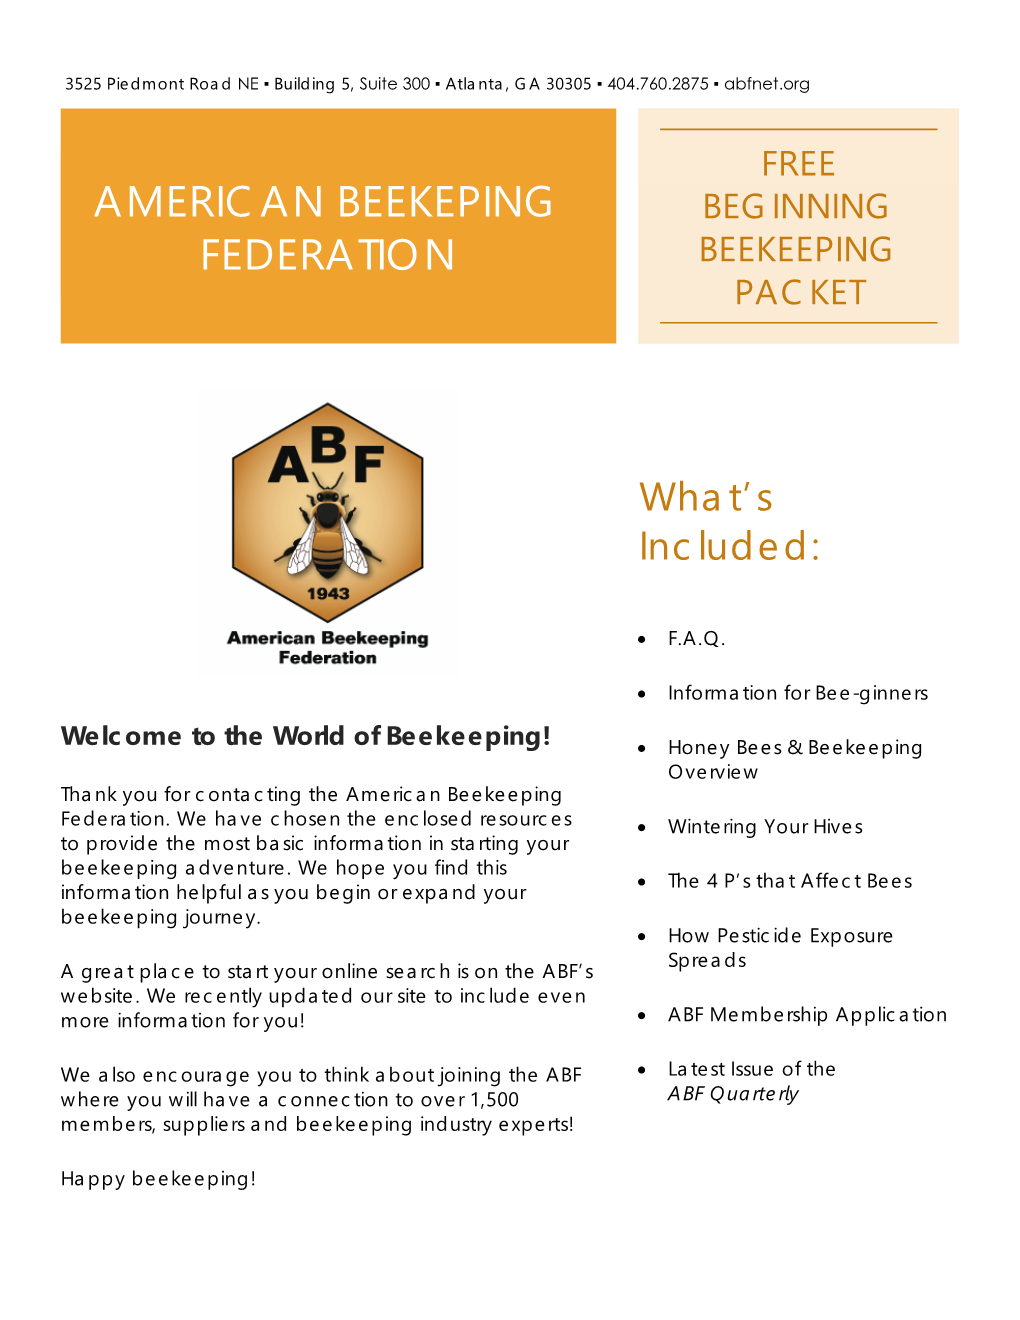 American Beekeping Federation